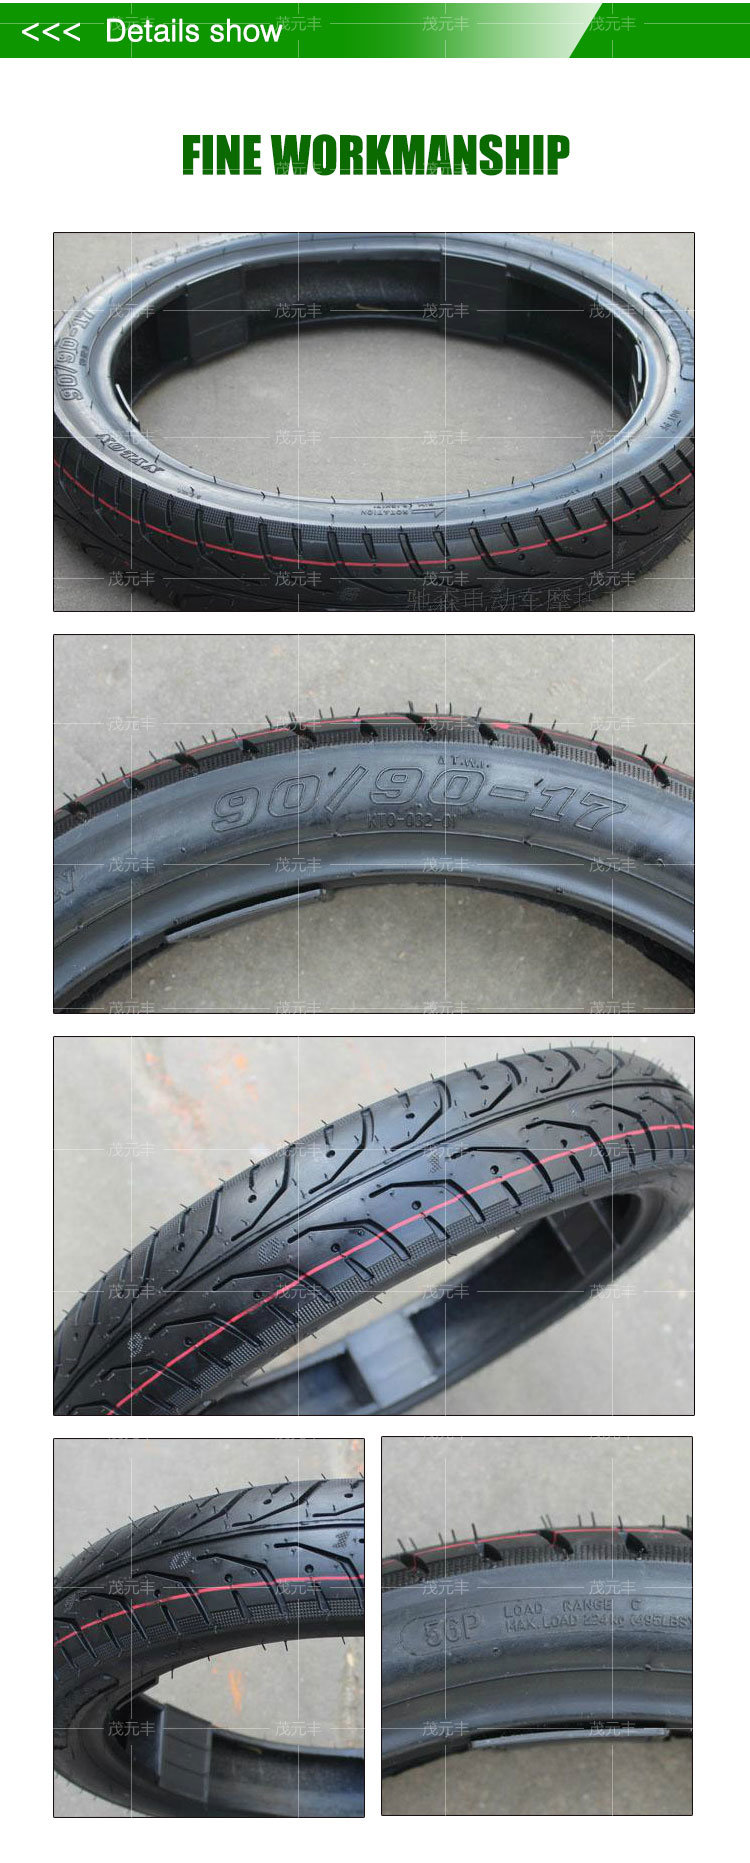 Street Standard 100/60-12 Motorcycle Tire